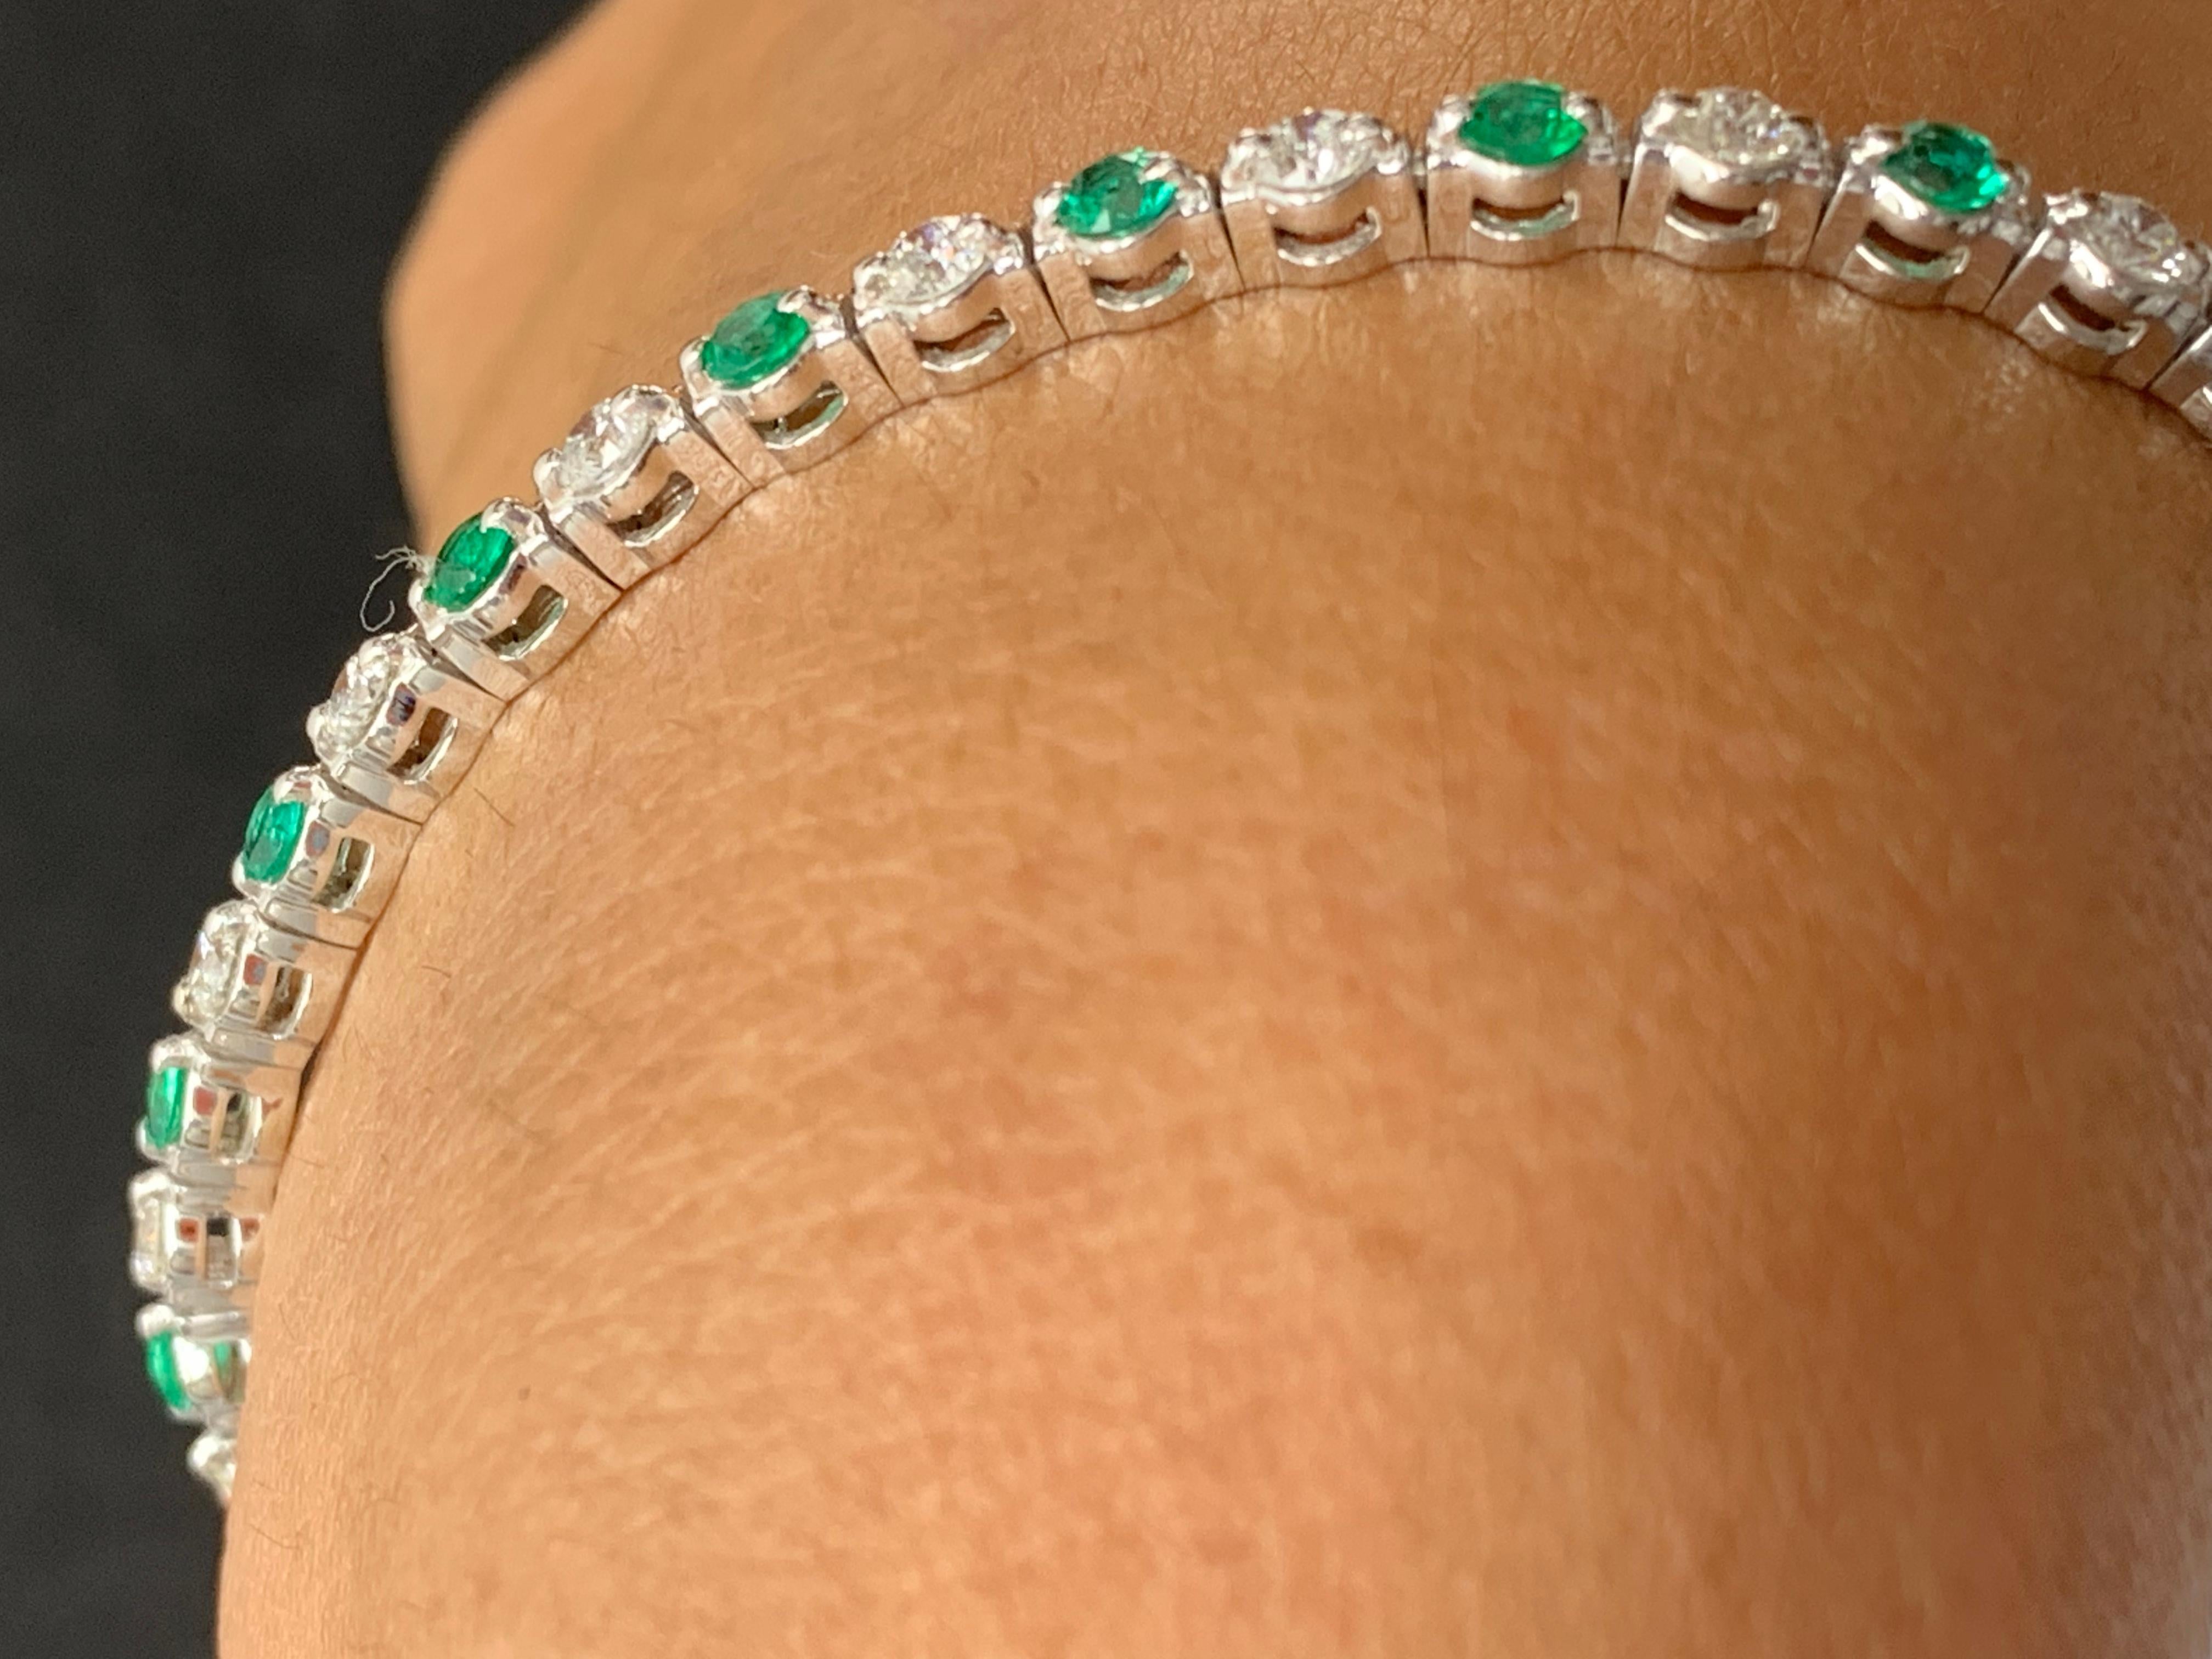 Grandeur 2.24 Carat Round Emerald and Diamond Bracelet in 14K White Gold For Sale 1